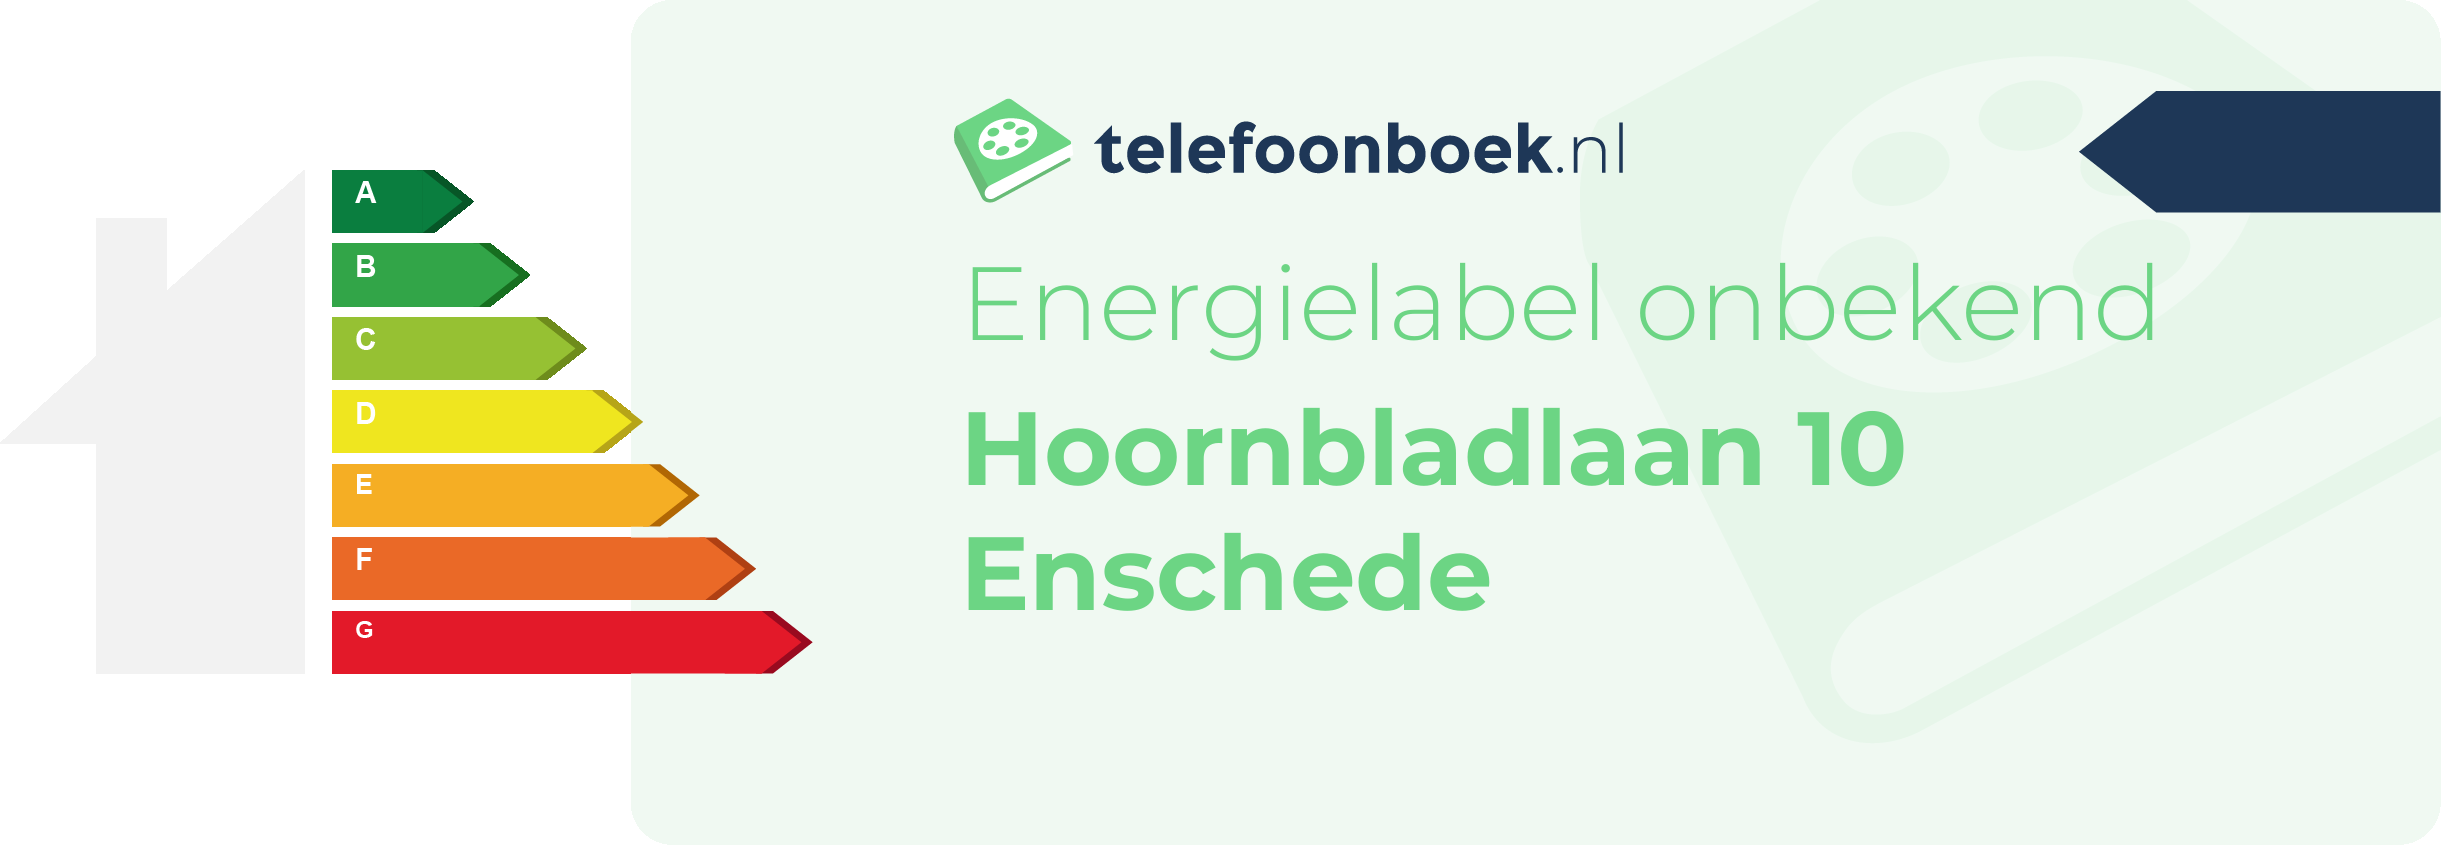 Energielabel Hoornbladlaan 10 Enschede